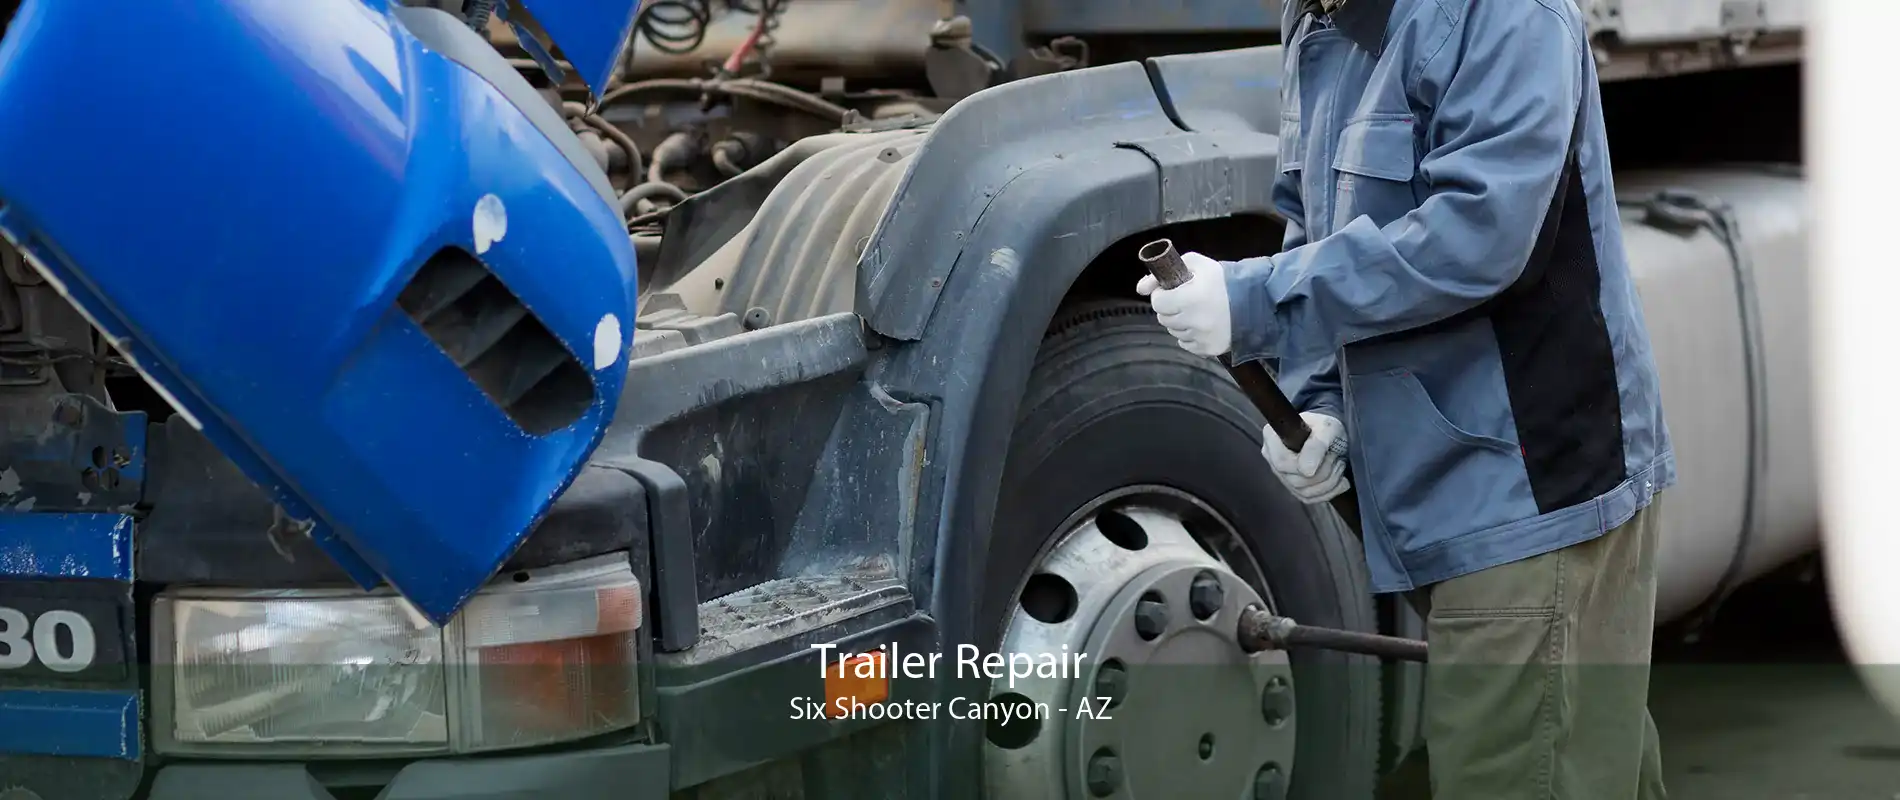 Trailer Repair Six Shooter Canyon - AZ